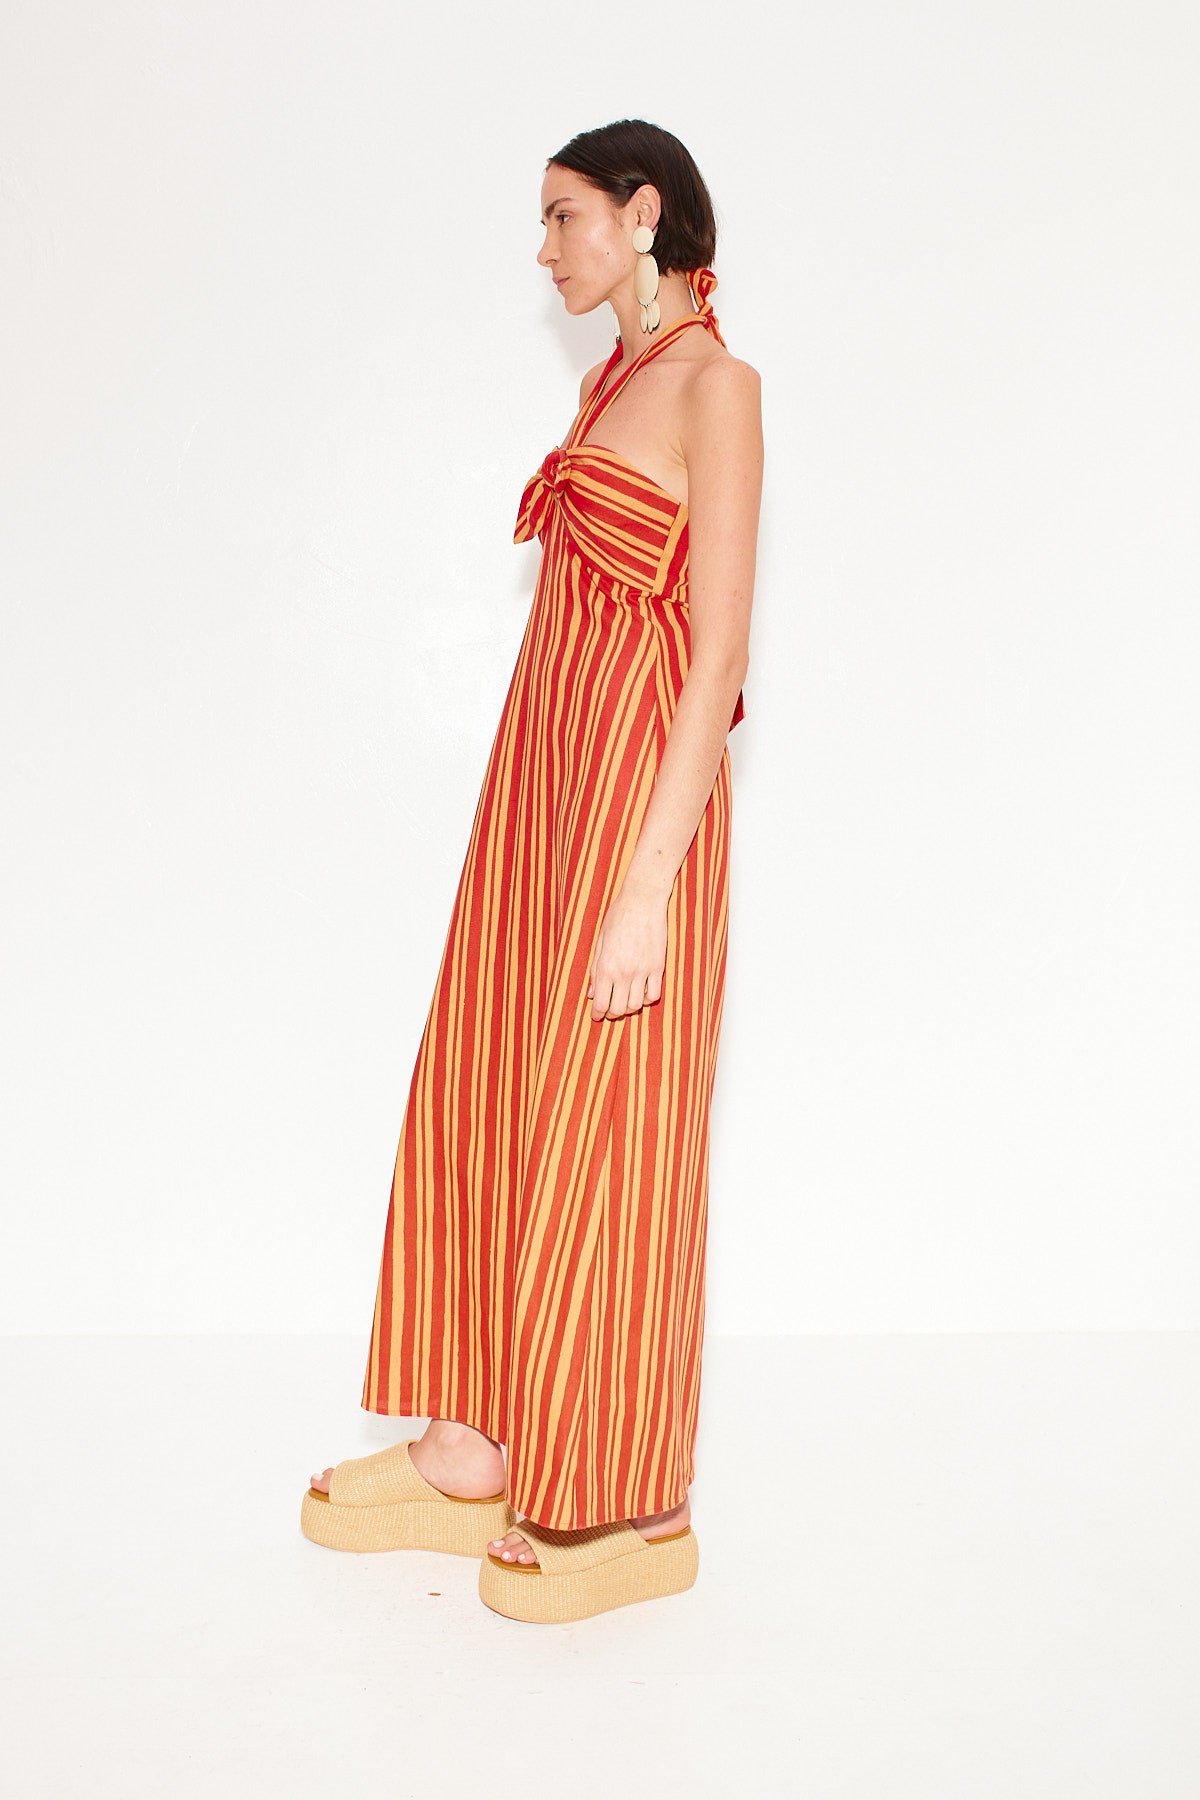 Del Linen Dress in Retro Red Orange Stripe